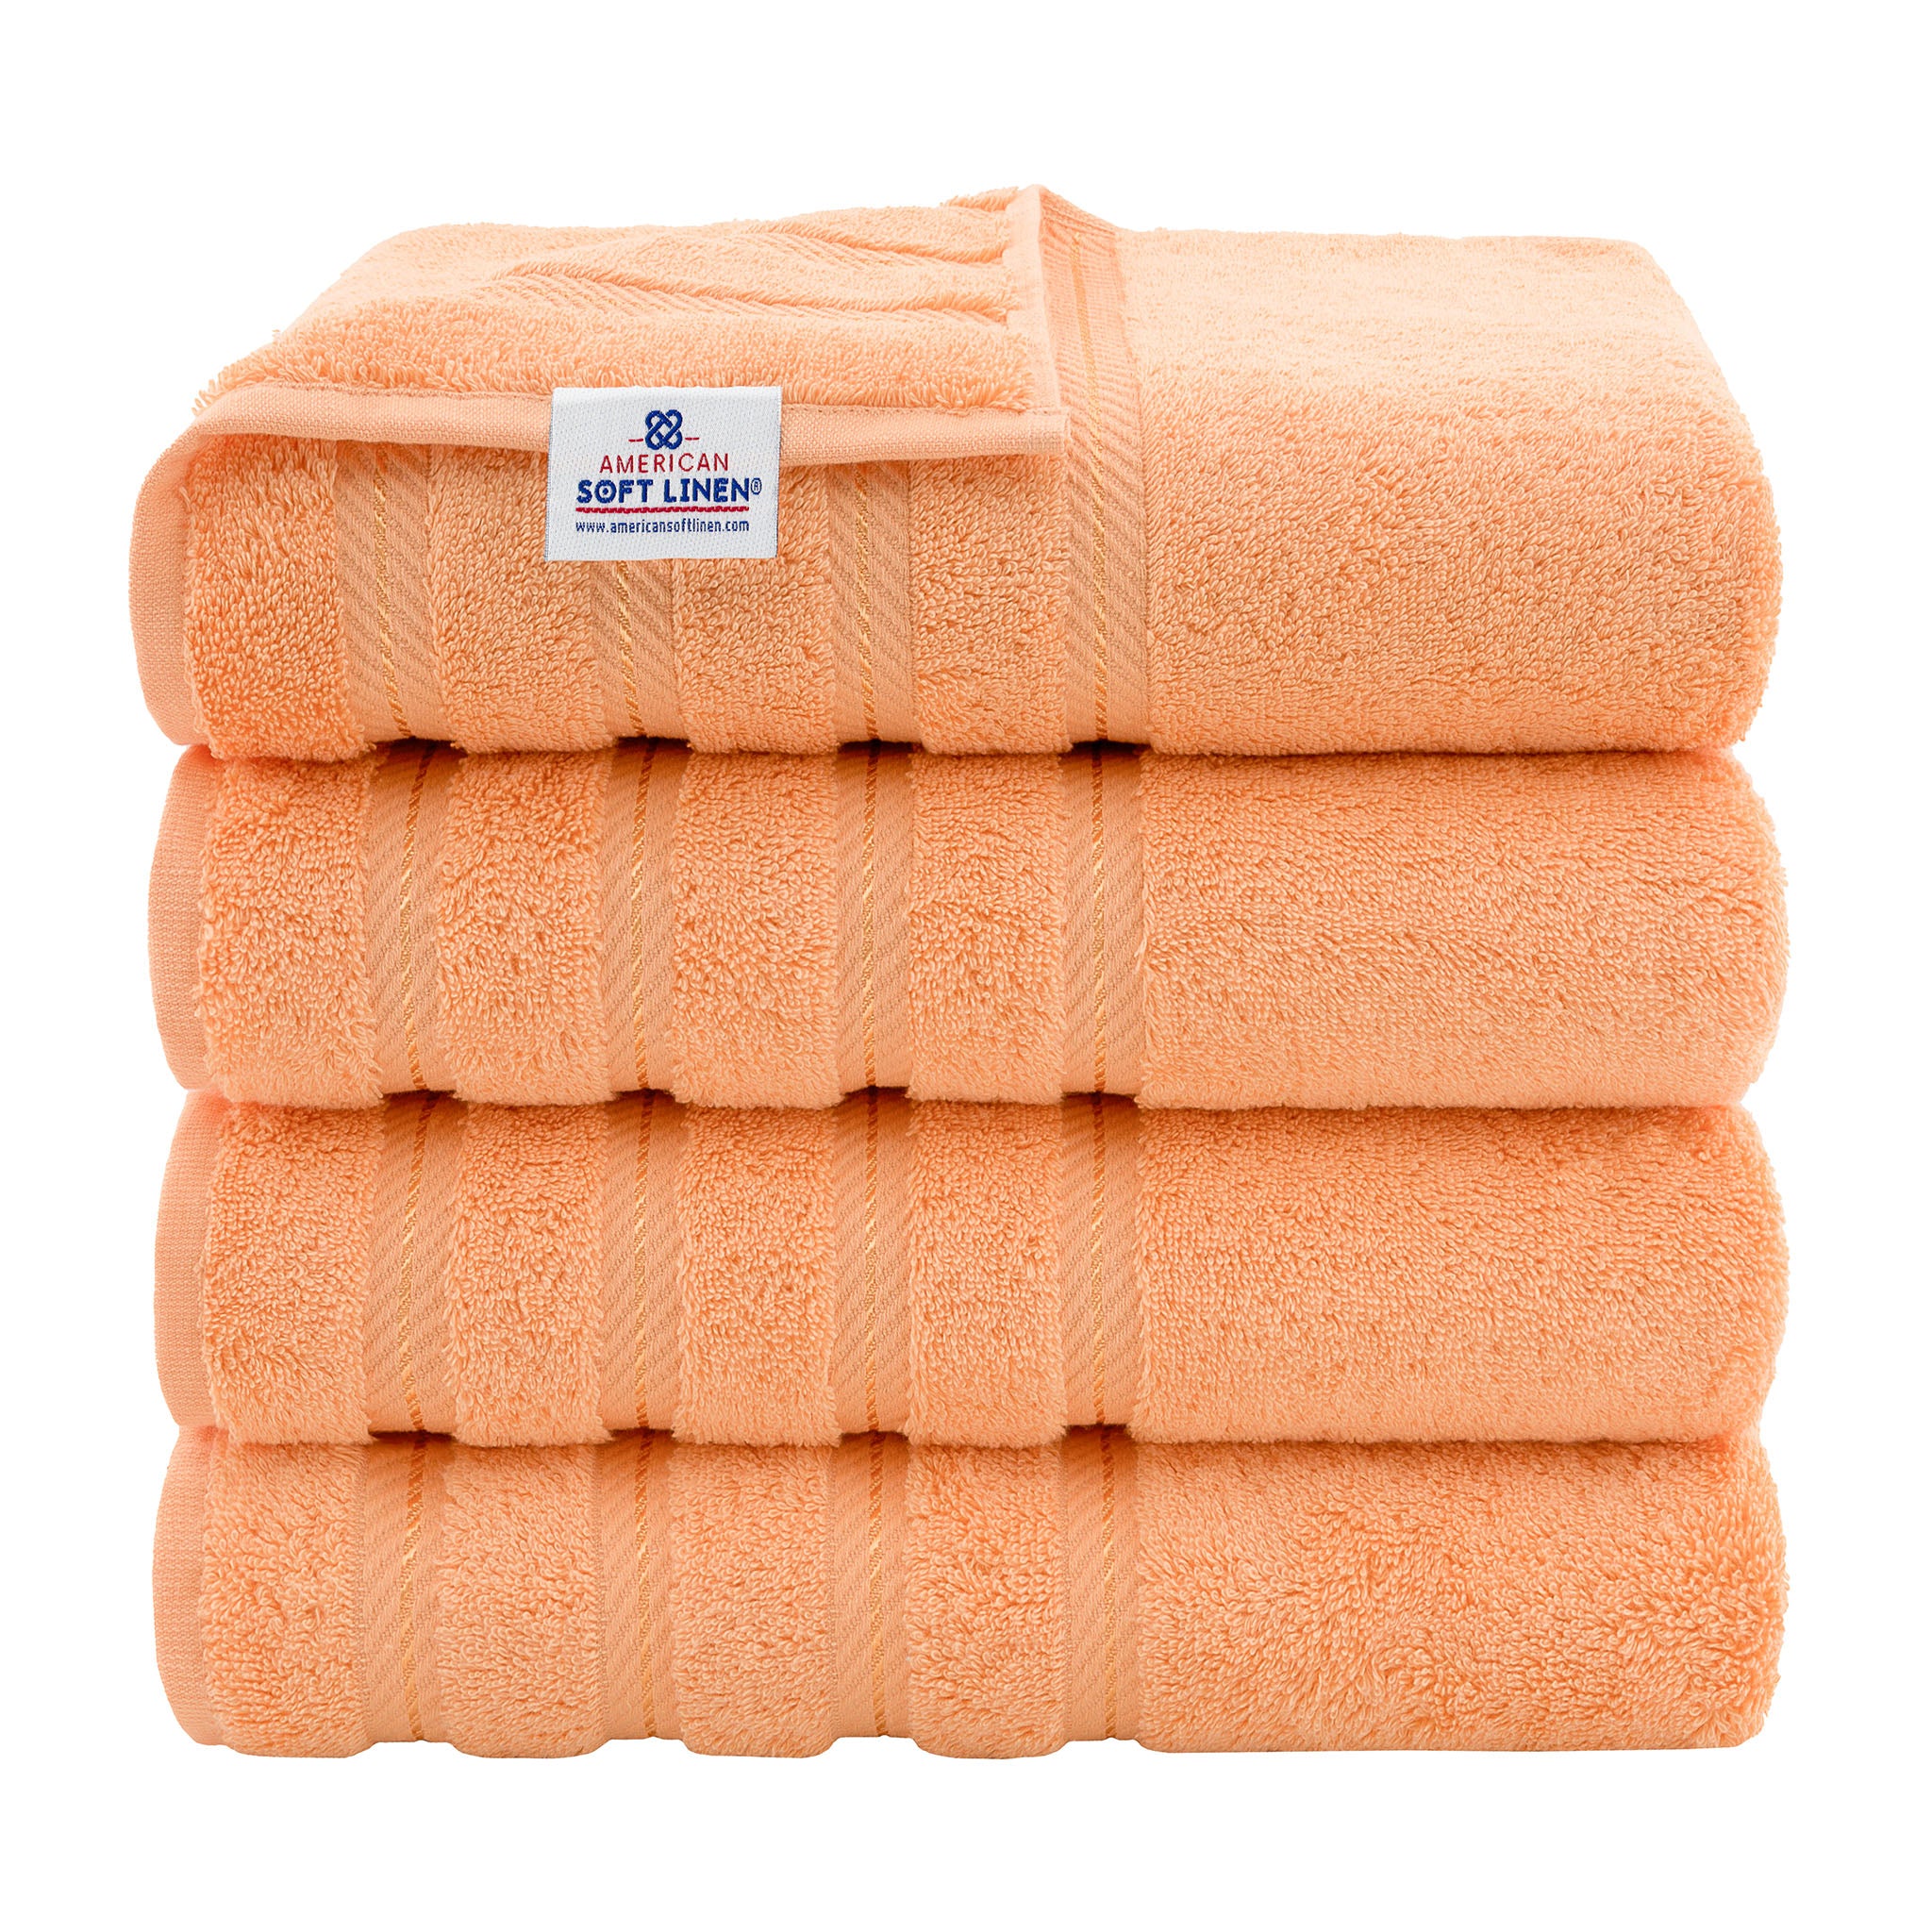 Cotton Paradise Bath Towels, 100% Turkish Cotton 27x54 inch 4 Piece Bath  Towel Sets for Bathroom, Soft Absorbent Towels Clearance Bathroom Set, Navy